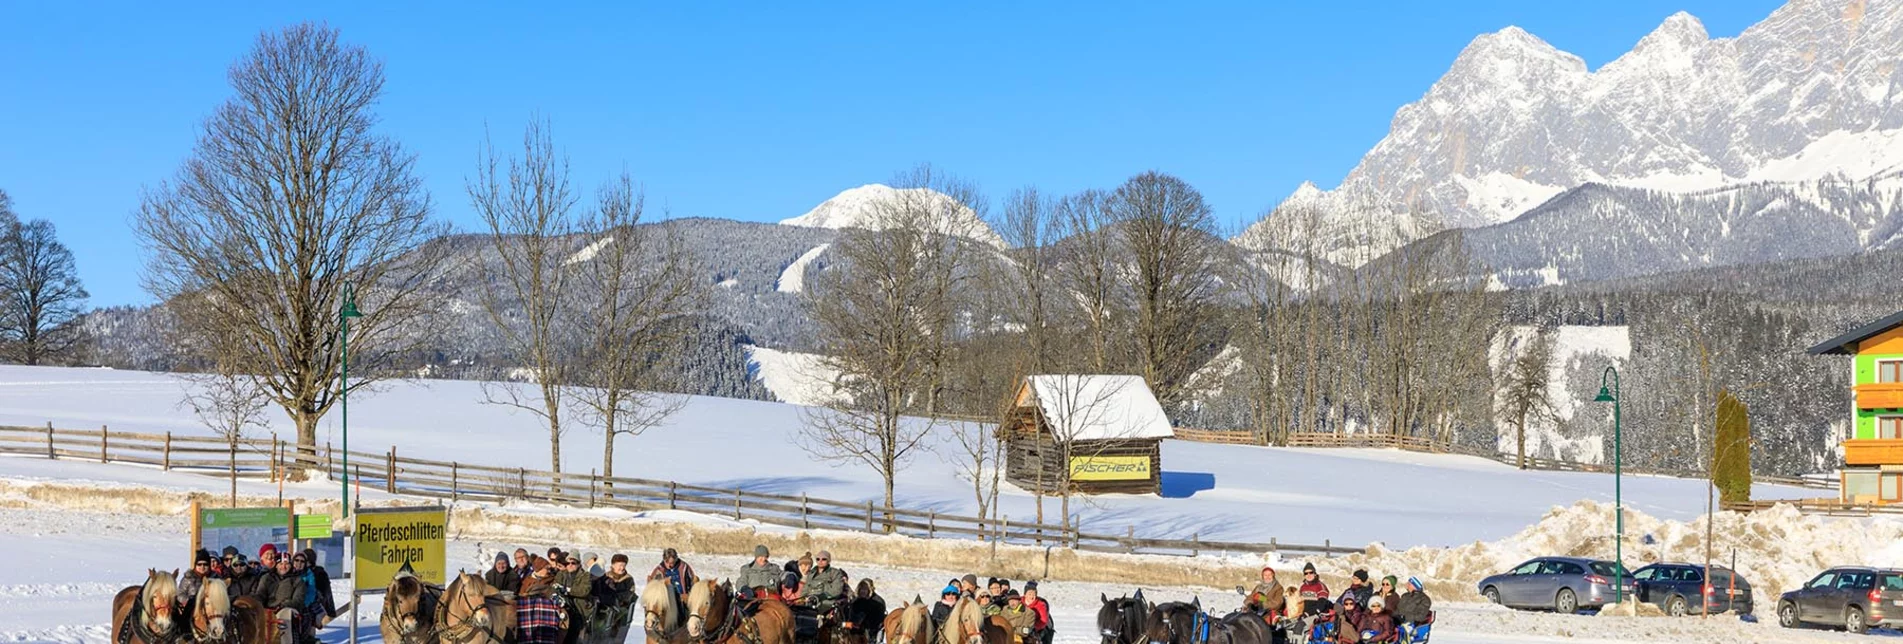 Horse Carriage Ride Rohrmoos Homestead Tour - Touren-Impression #1 | © Tourismusverband Schladming - Martin Huber